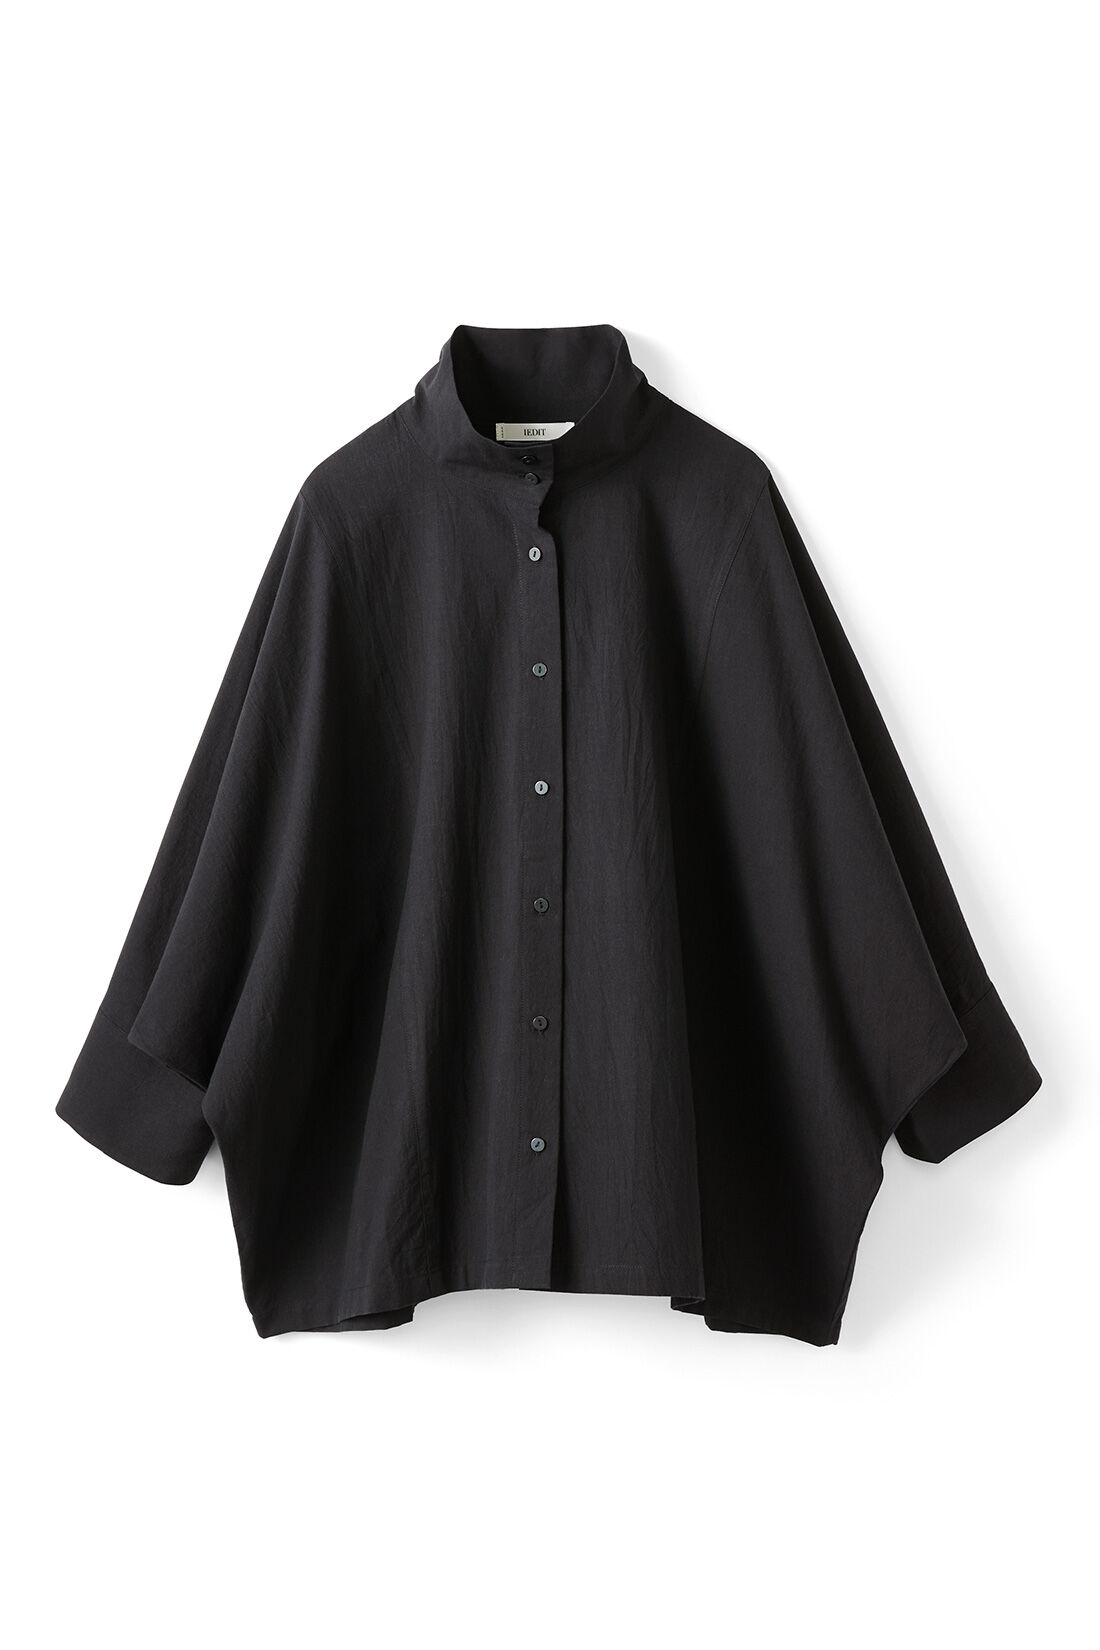 IEDIT|IEDIT[イディット]　コットン素材のスタンドカラー ドルマンスリーブシャツ〈ブラック〉|〈ブラック〉